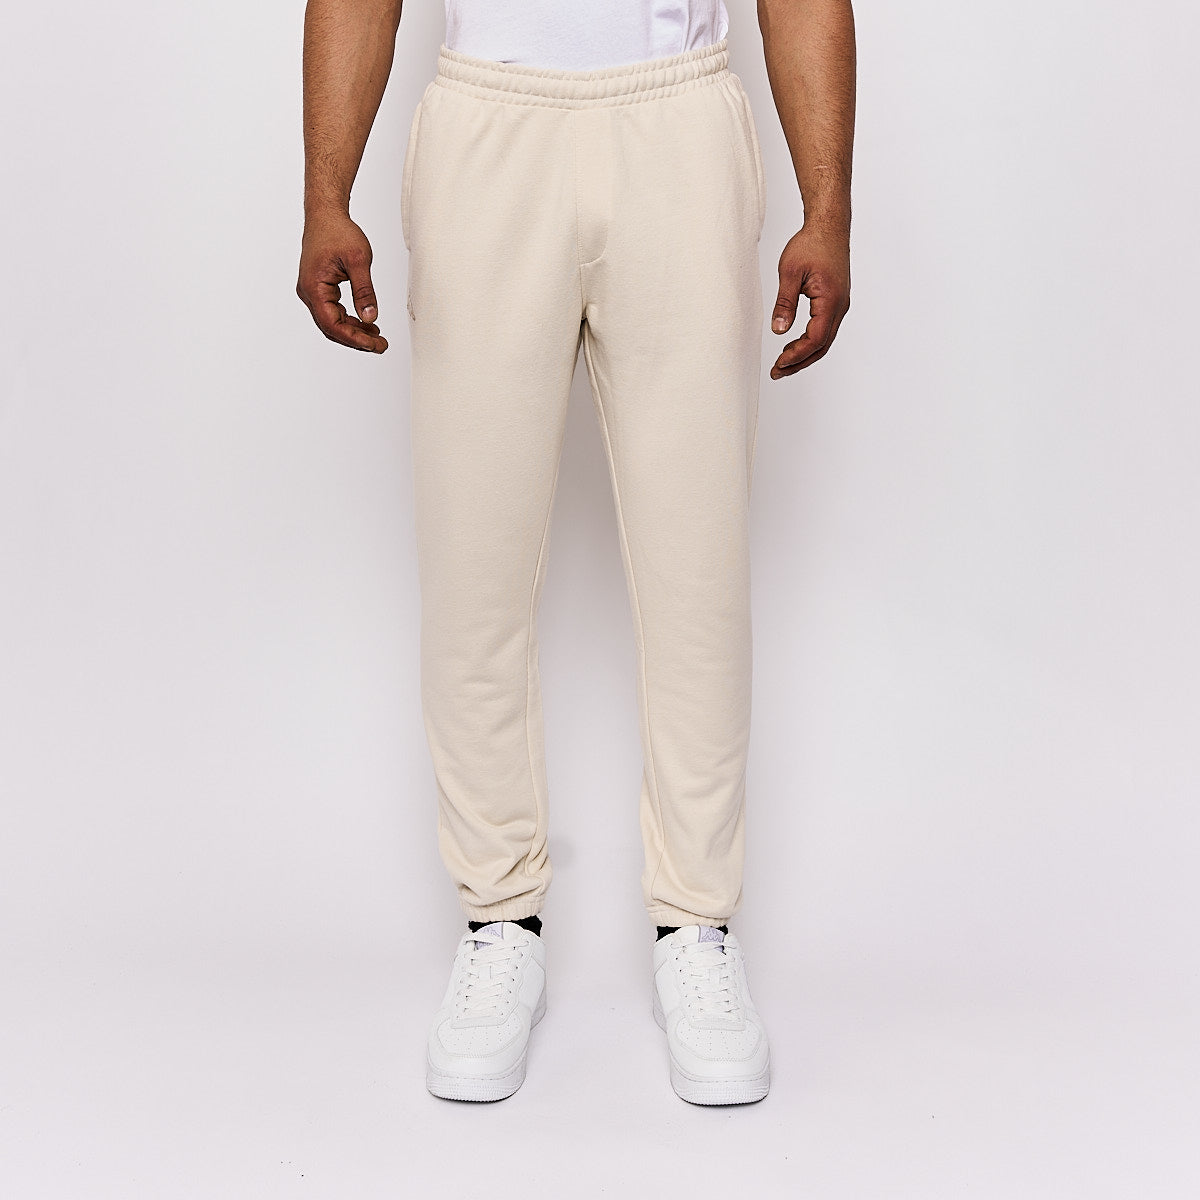 Pantalon homme Faiti Sportswear Blanc